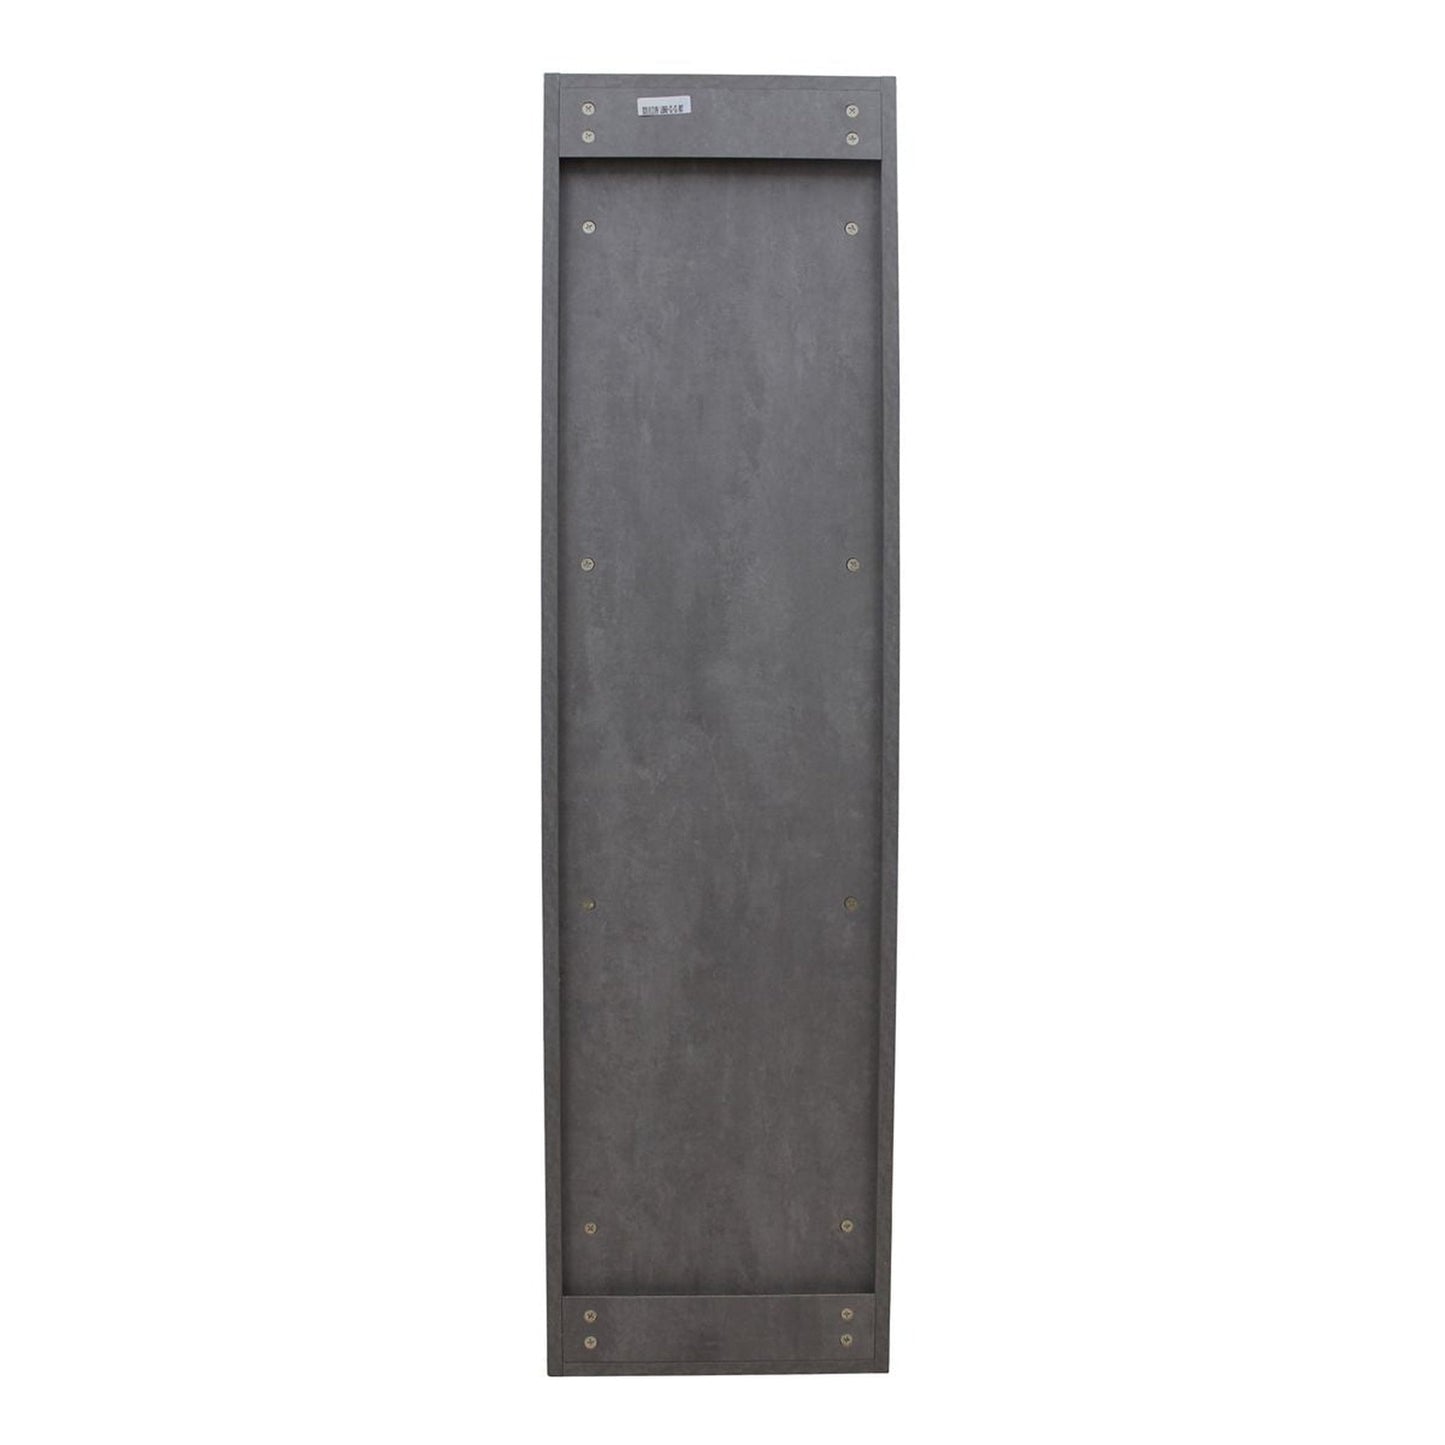 Moreno Bath Bohemia Lina 16" Cement Gray Wall-Mounted Linen Storage Cabinet